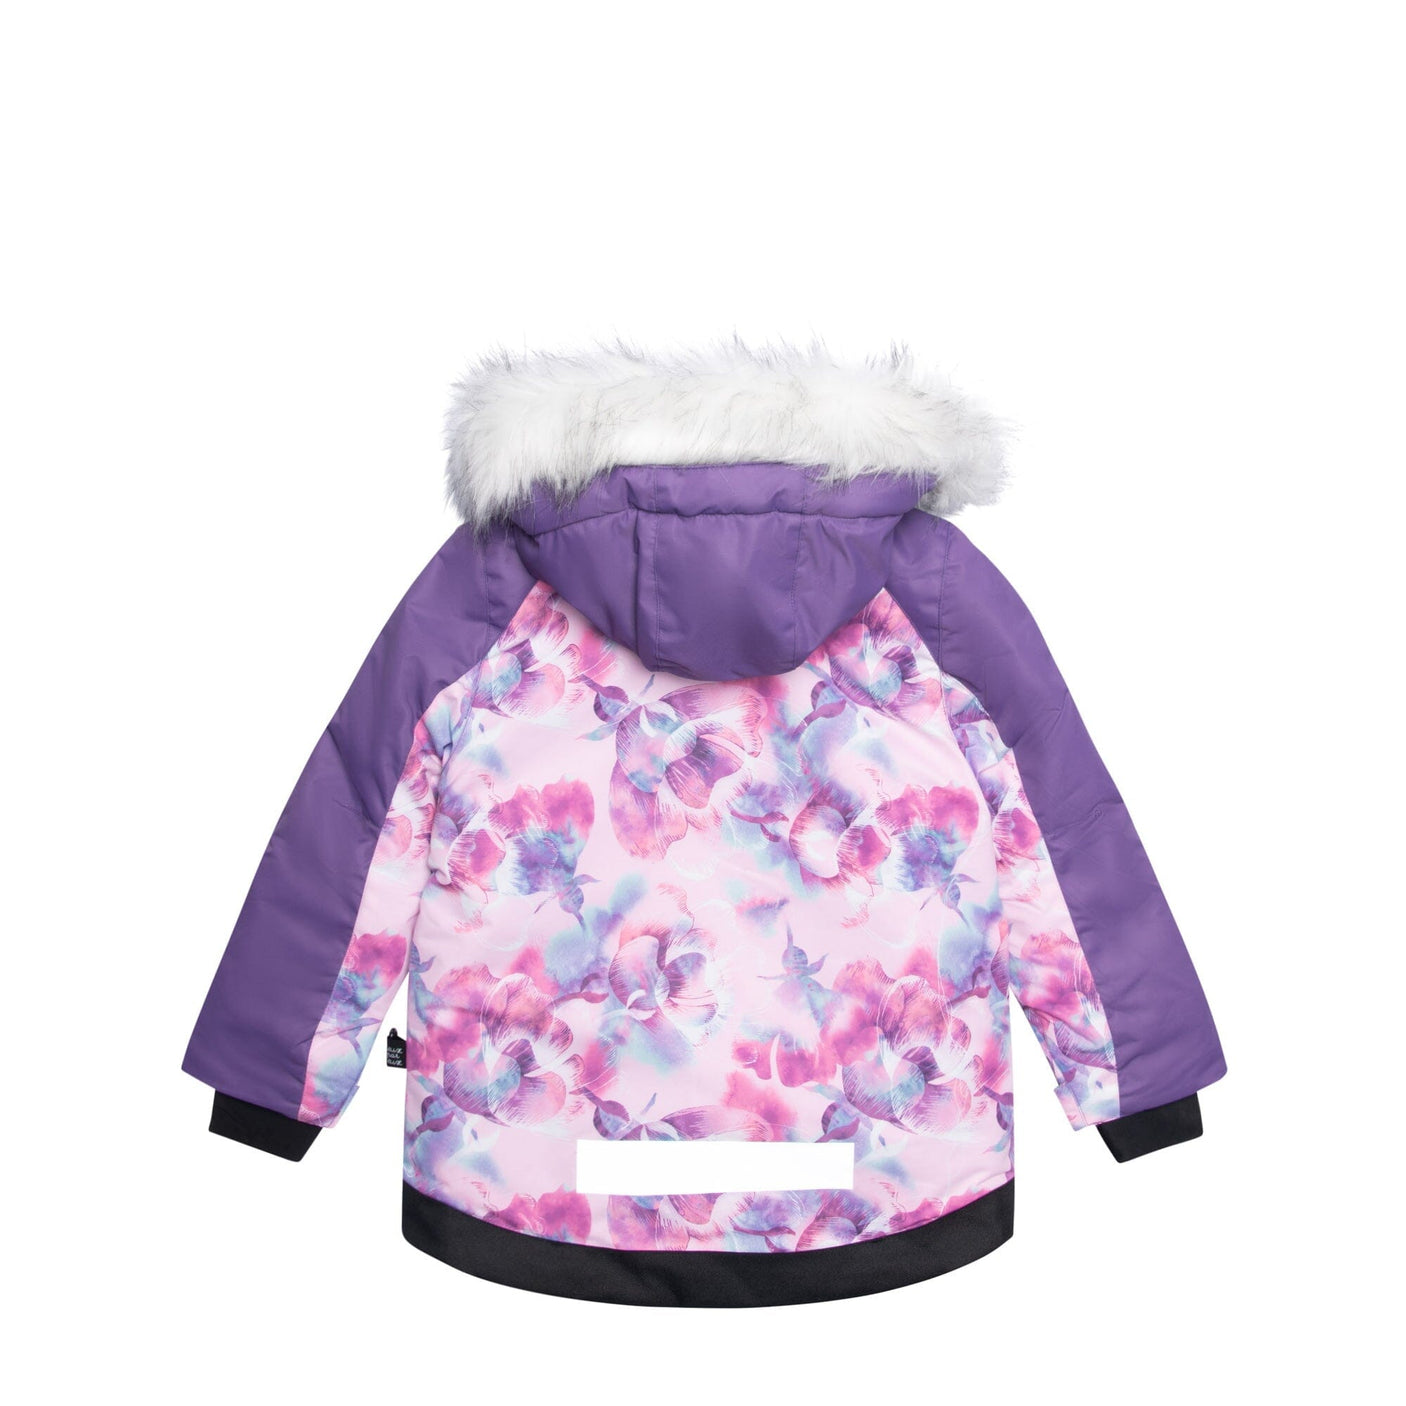 Two Piece Snowsuit Purple With Watercolor Floral Print-5